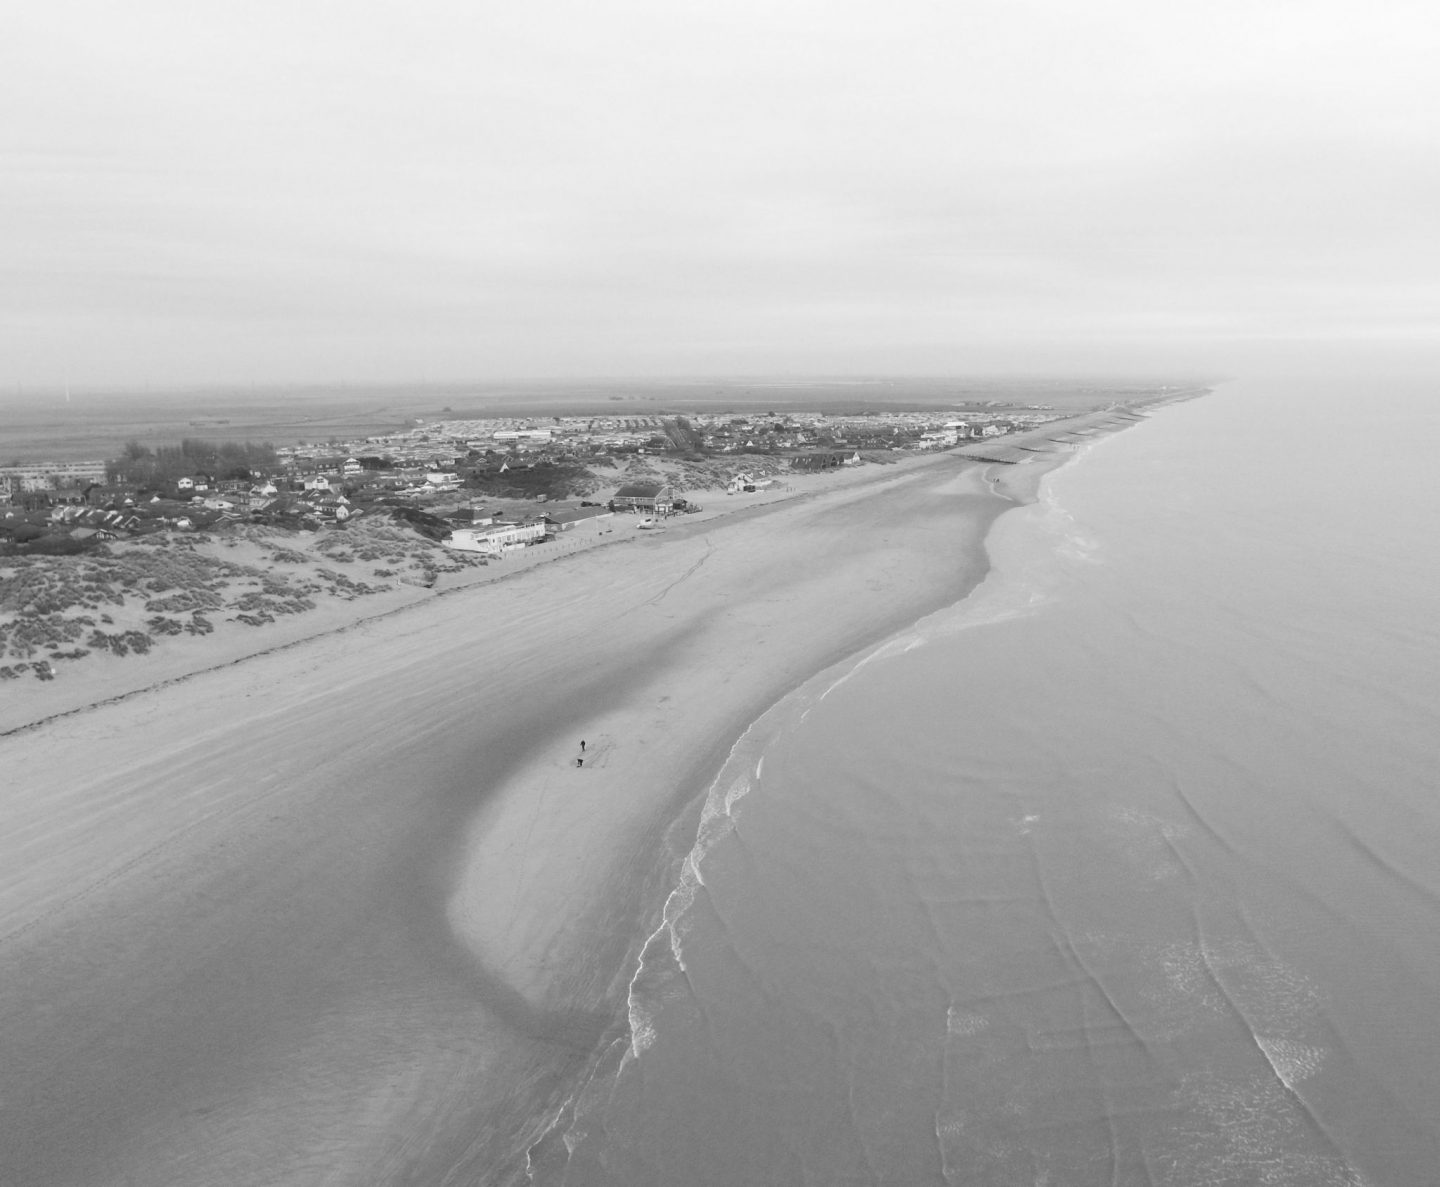 Camber Sands, Camber, Camber Sands beach, drone photograph, drone photo, Sussex coast, East Sussex, DJI Phantom, dadbloguk, uk dad blogger, dadbloguk.com, dad blog uk